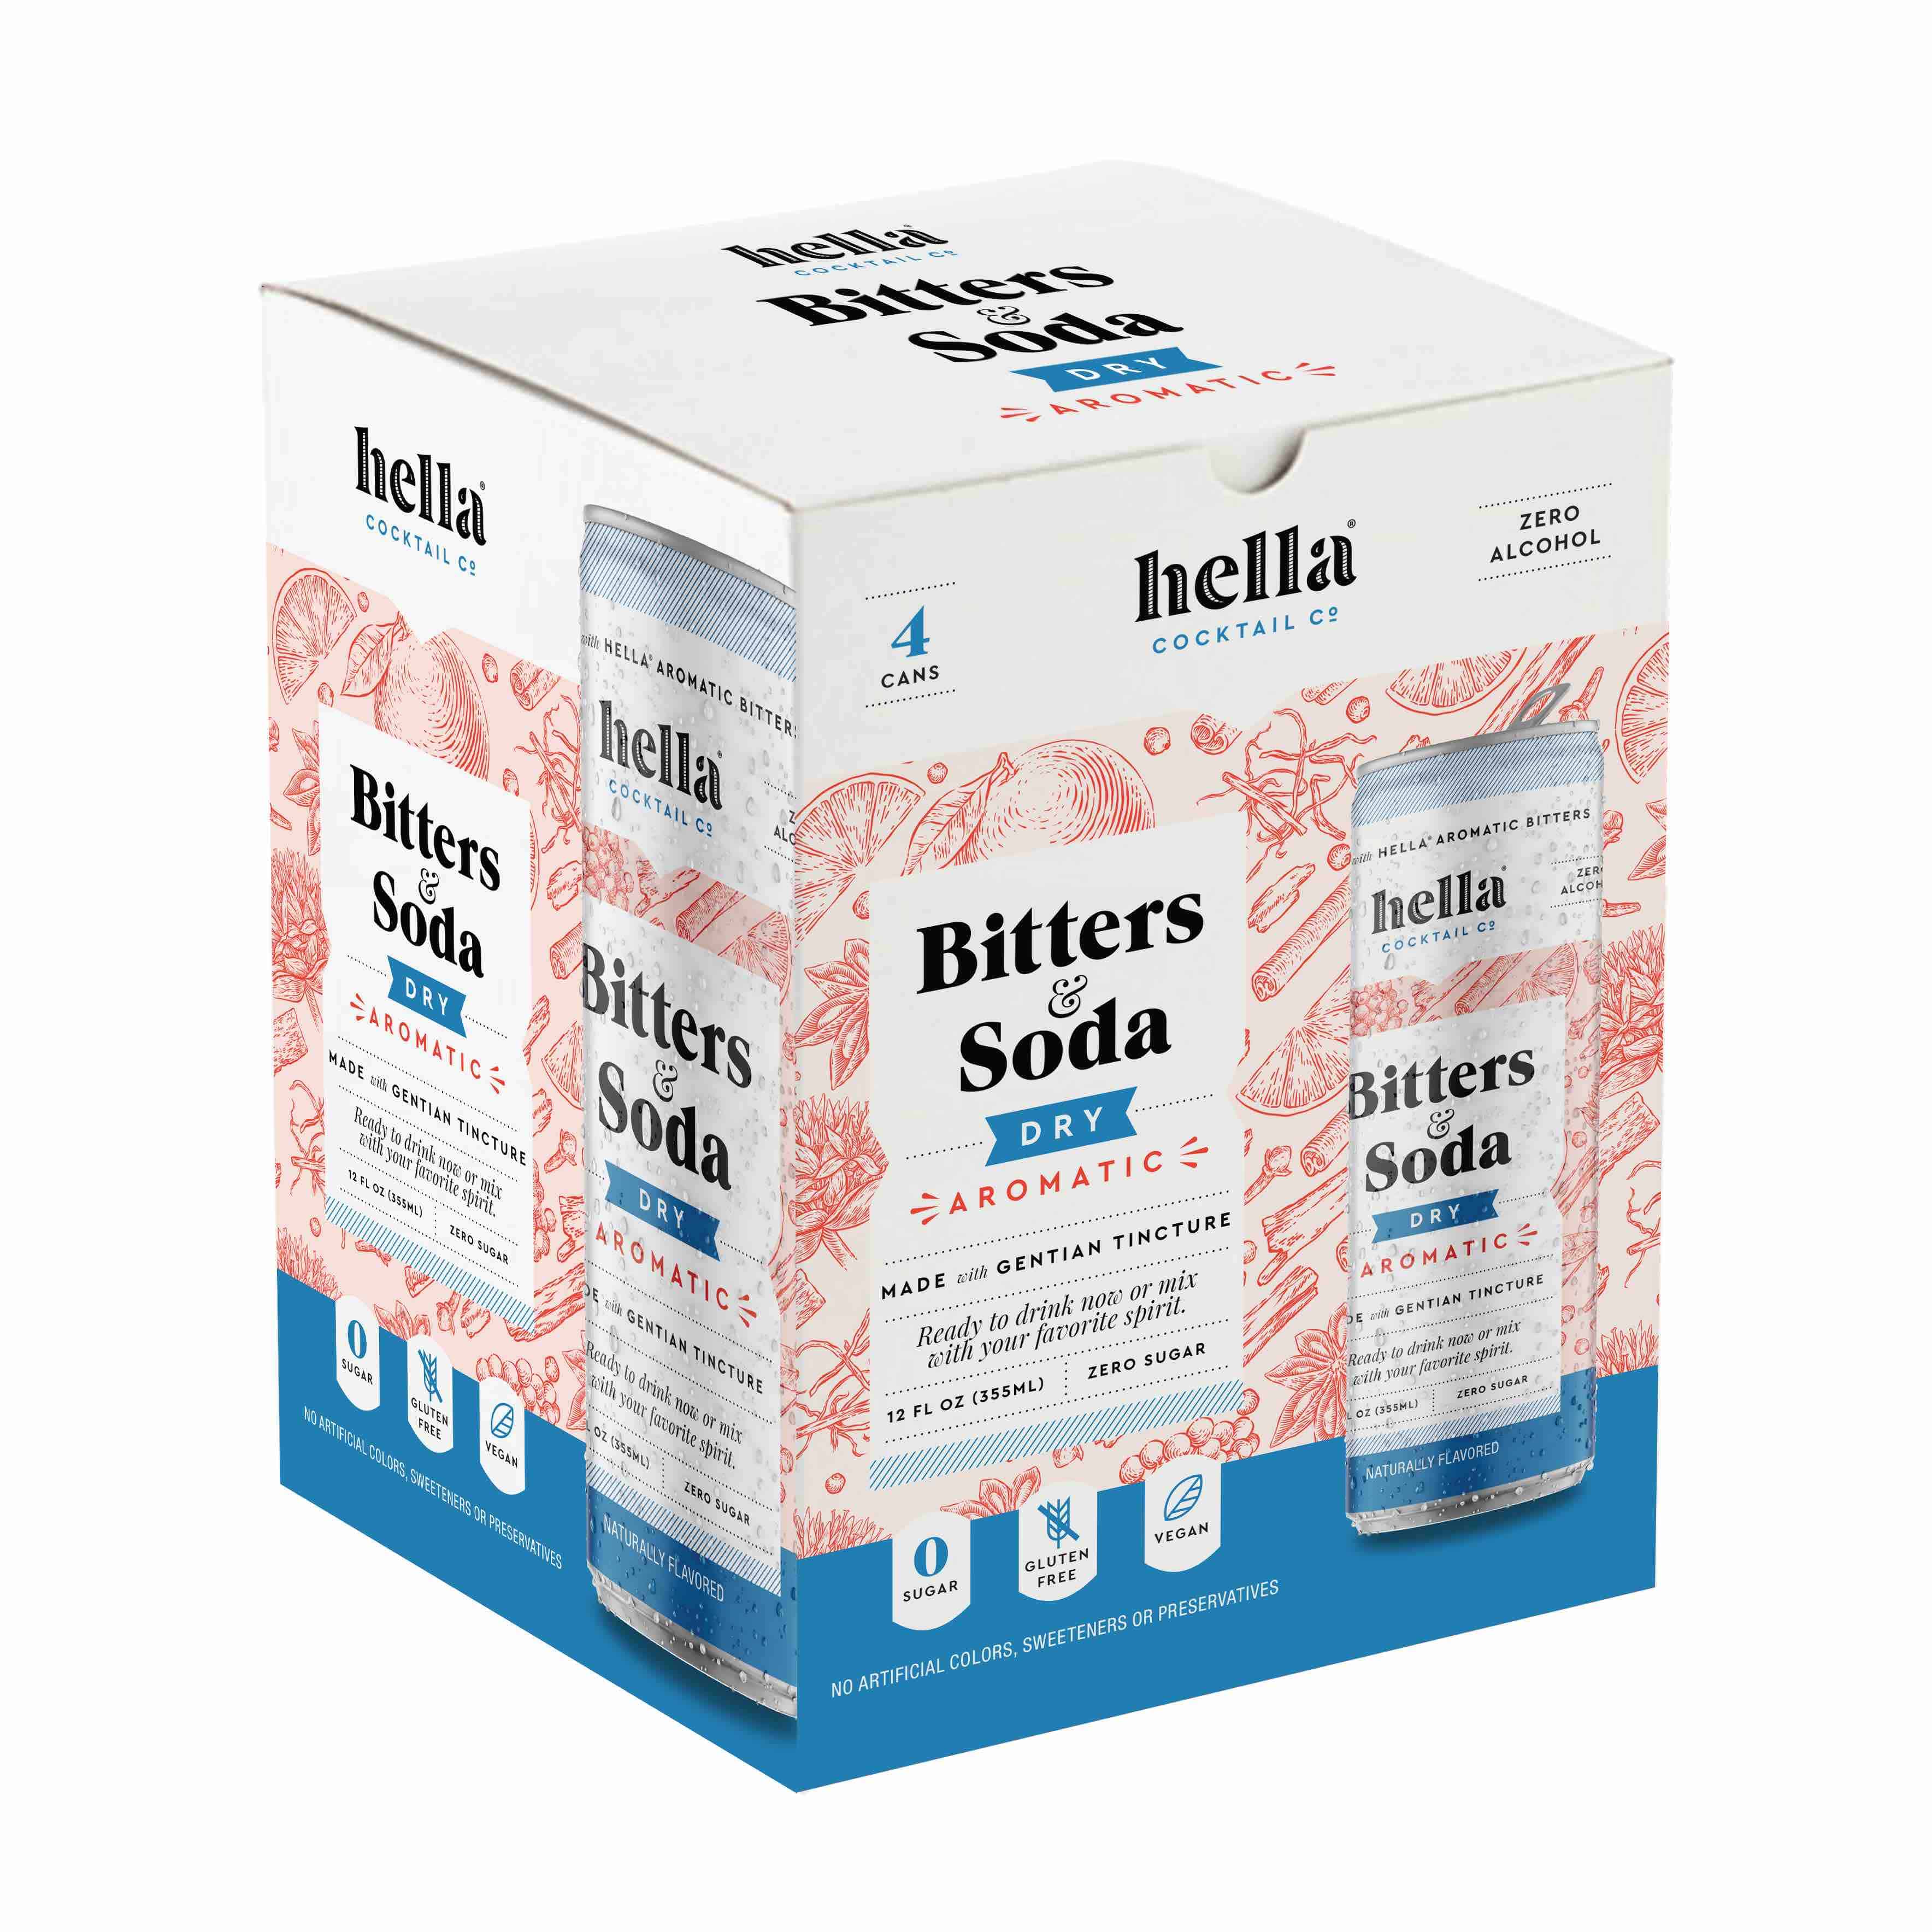 Bitters & Soda Dry Aromatic 12oz Slim Cans 6/4PK (48oz) (ZERO SUGAR) 6 innerpacks per case 3.5 lbs